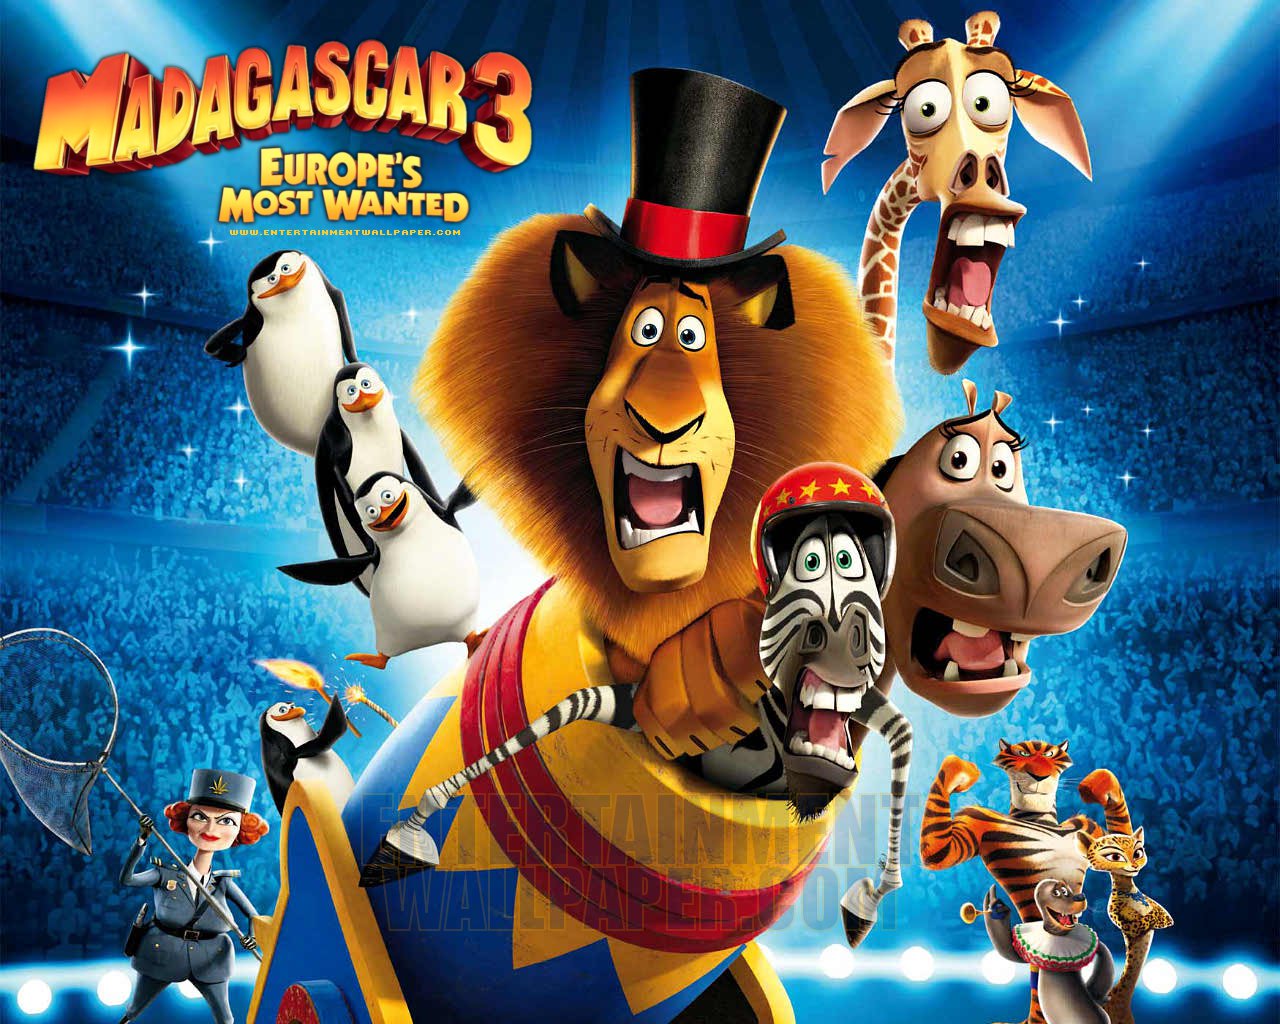 Madagascar 3 Movie